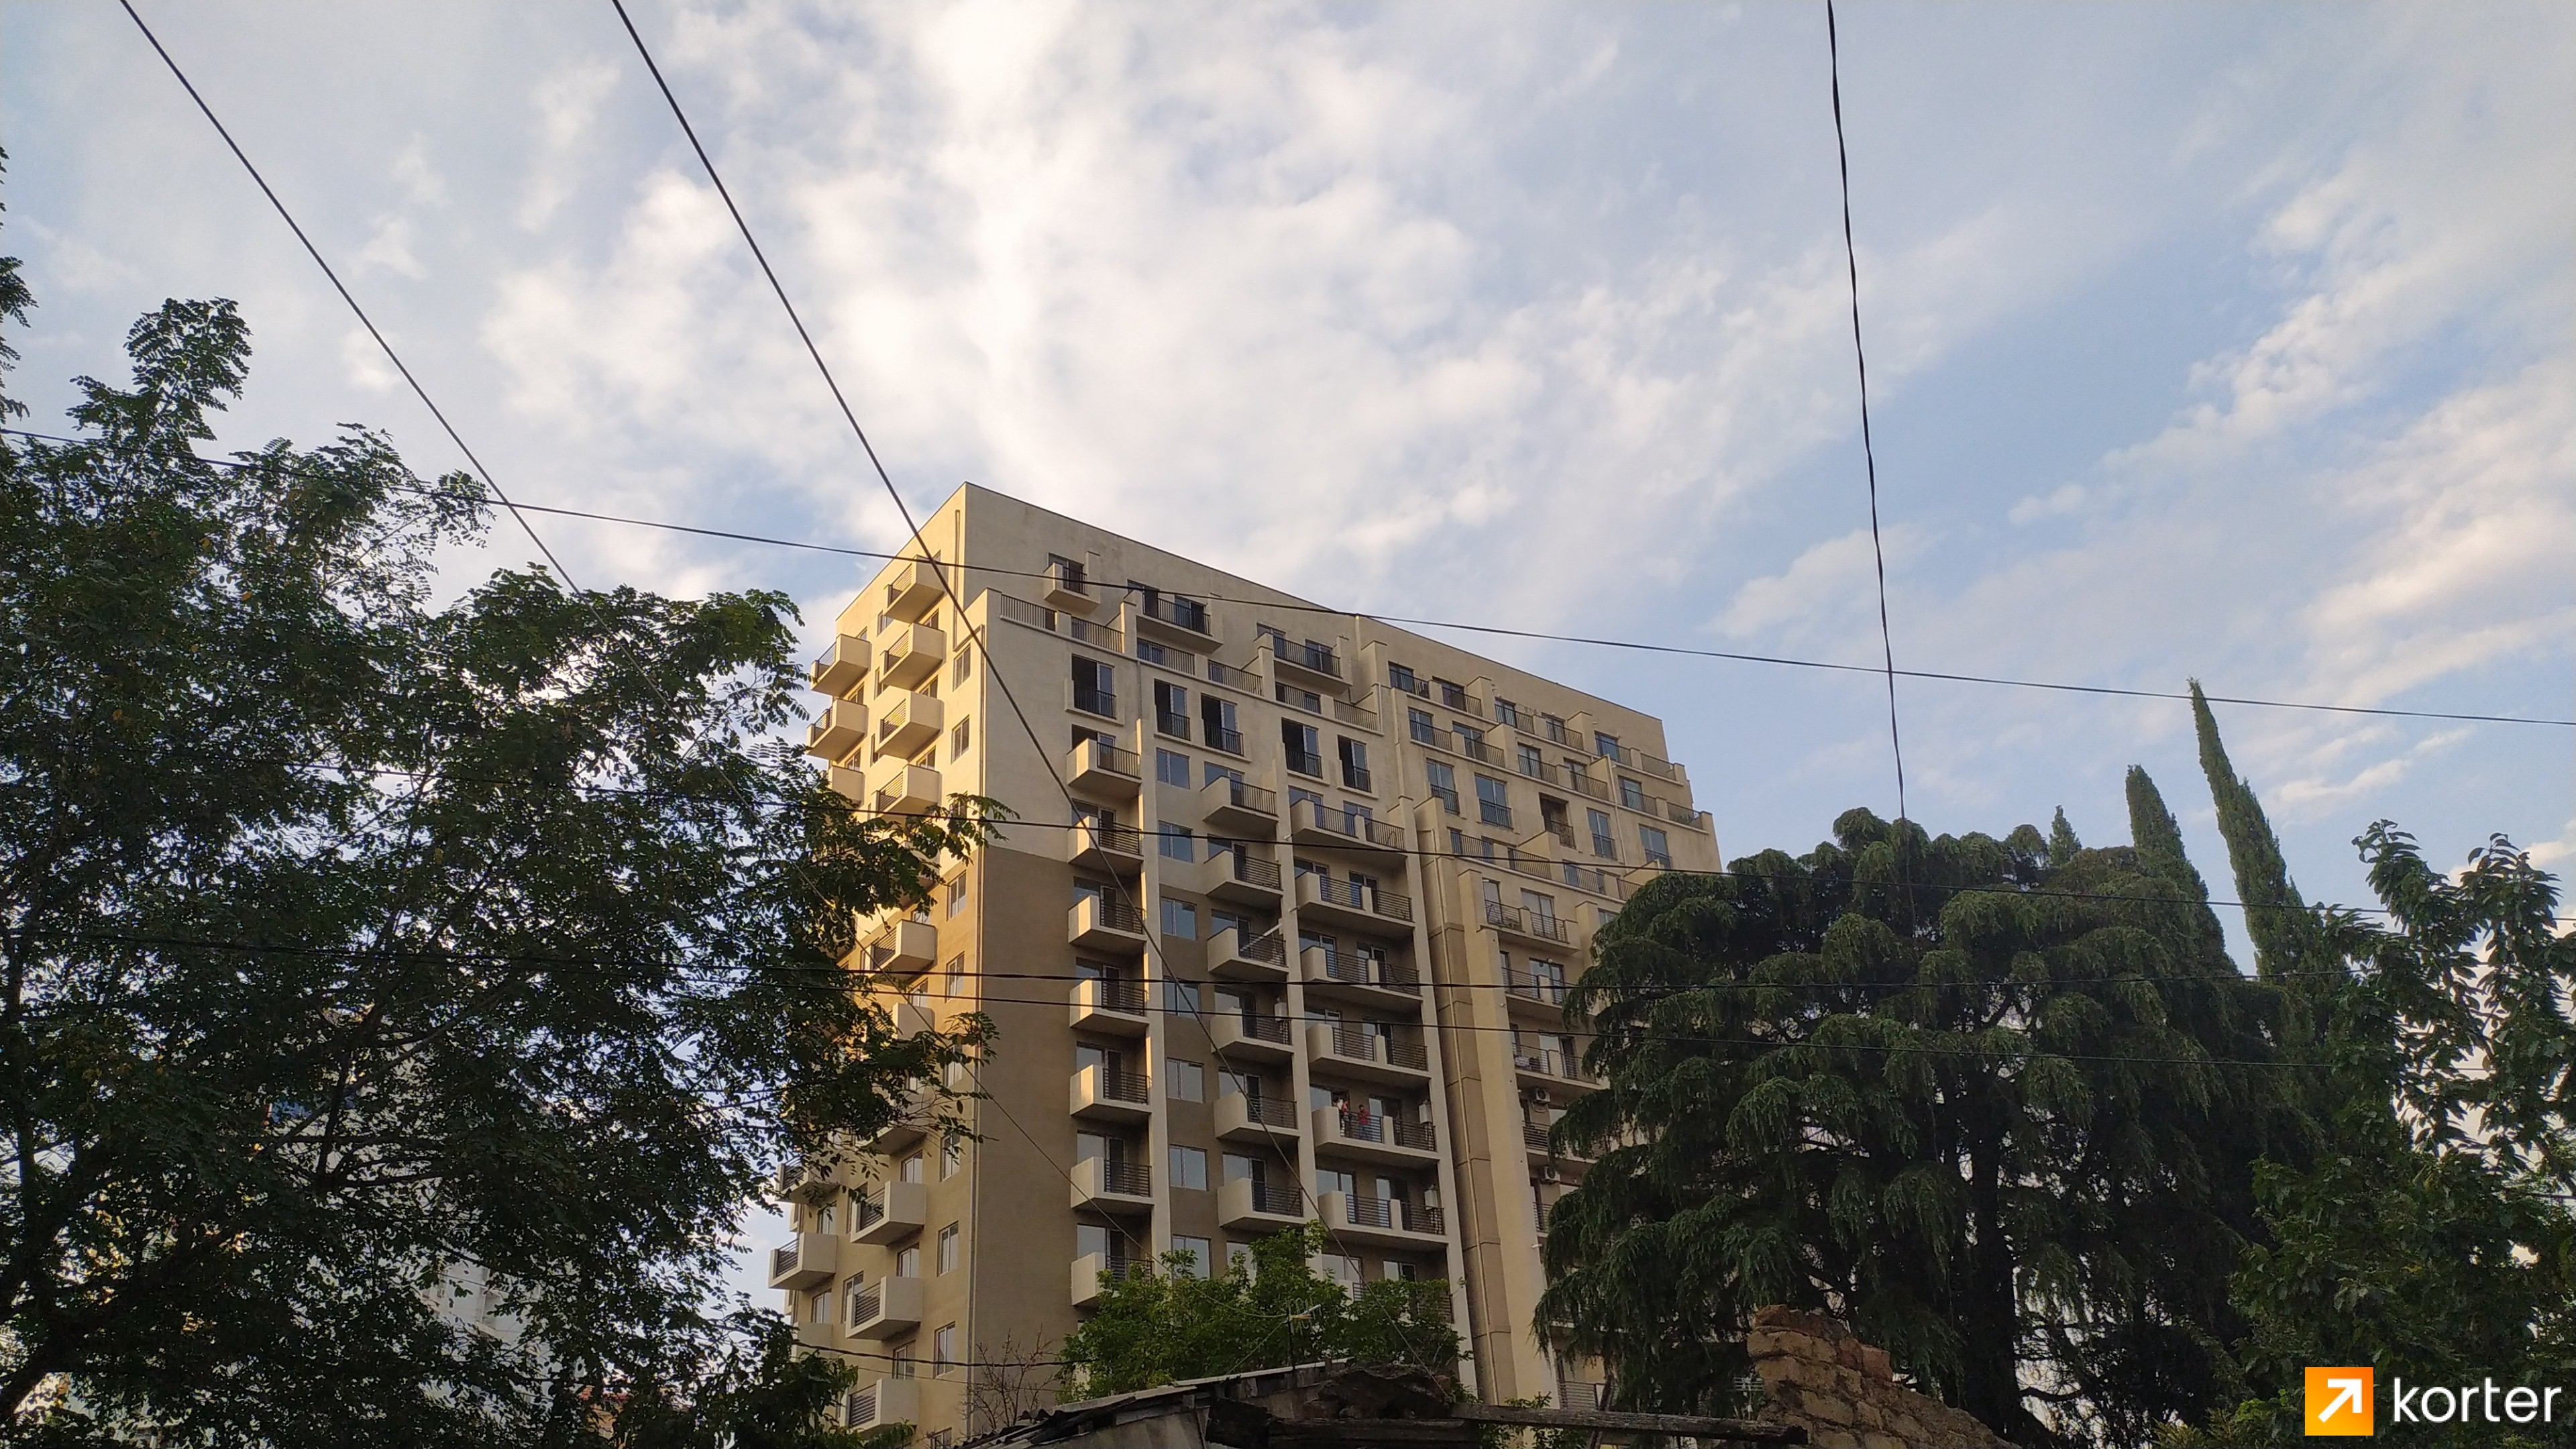 Construction progress House on Bochorishvili 24-26 - Angle 1, September 2020